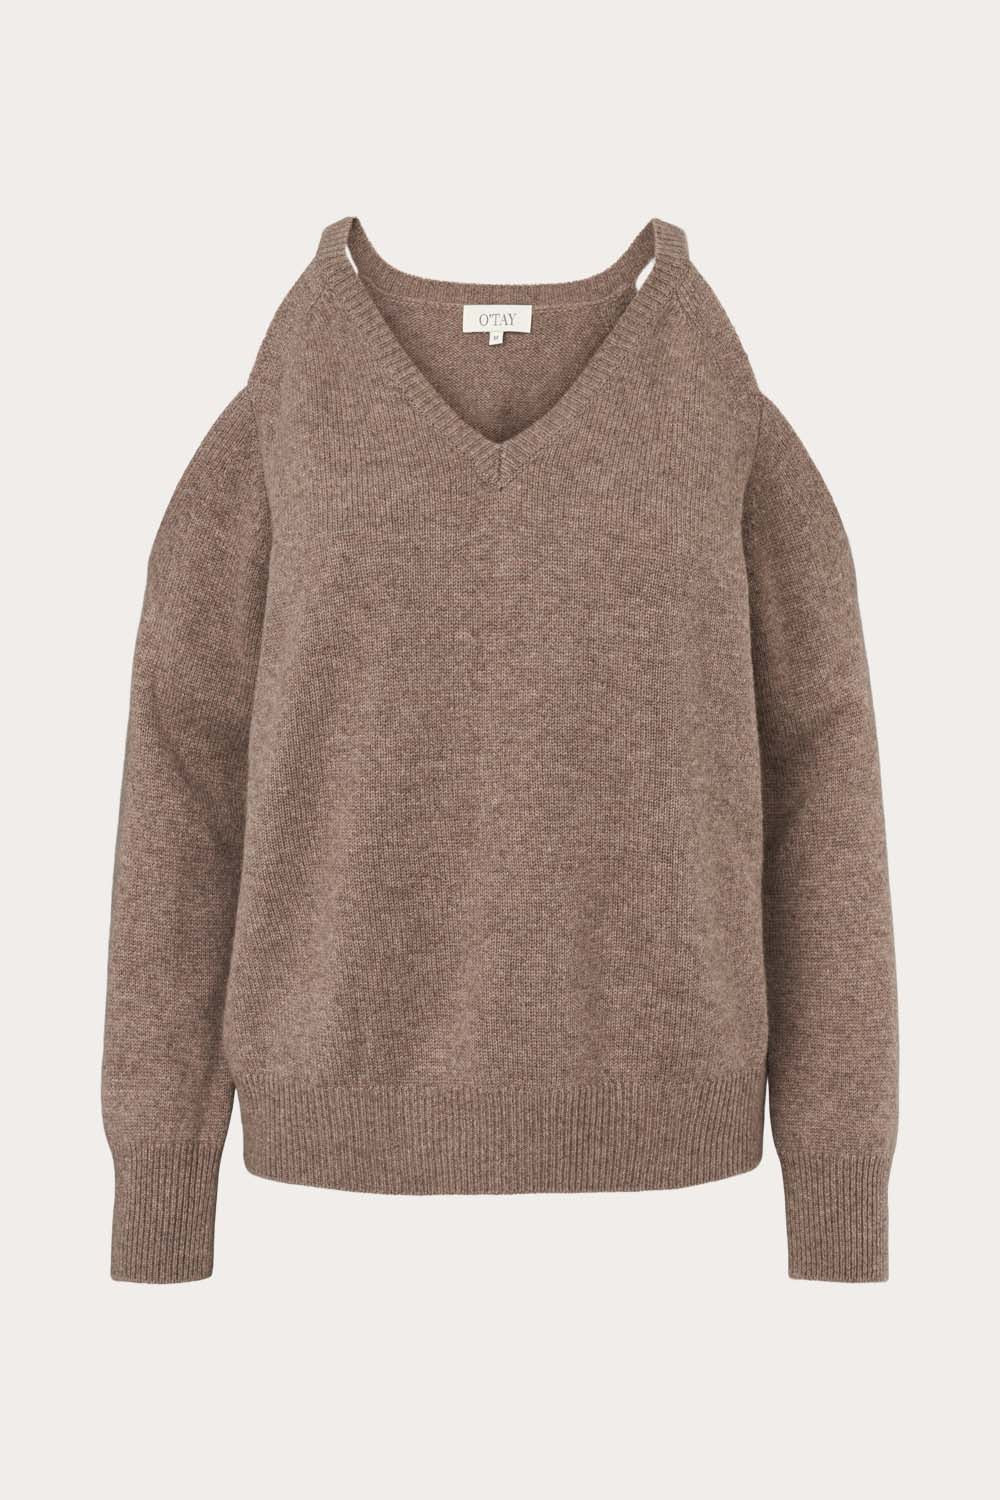 O&#39;TAY Davina Sweater Bluser Brownstone